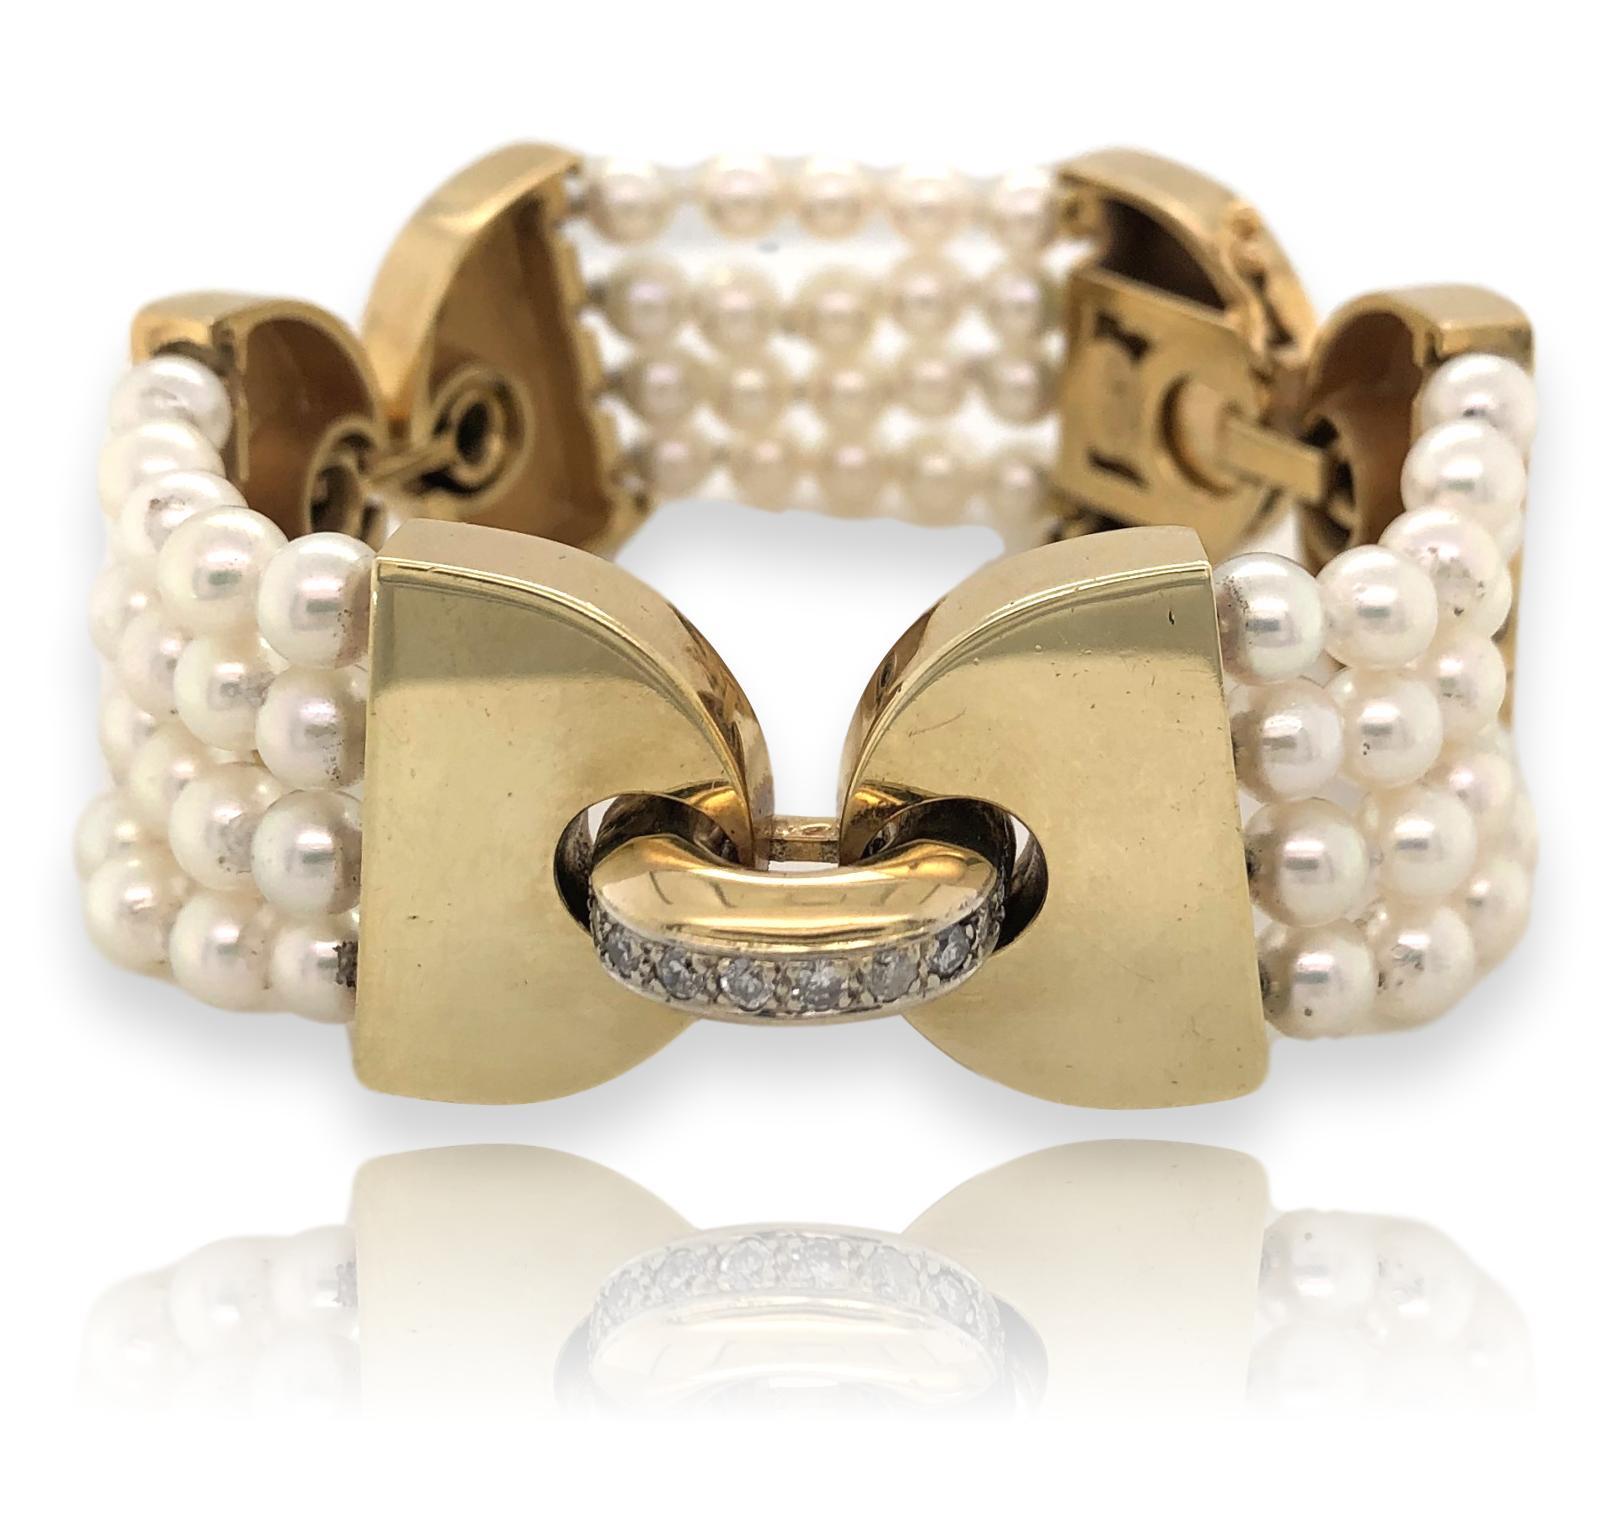 14k modernist diamond Multi-strand pearl bracelet by La Triomphe. The 7